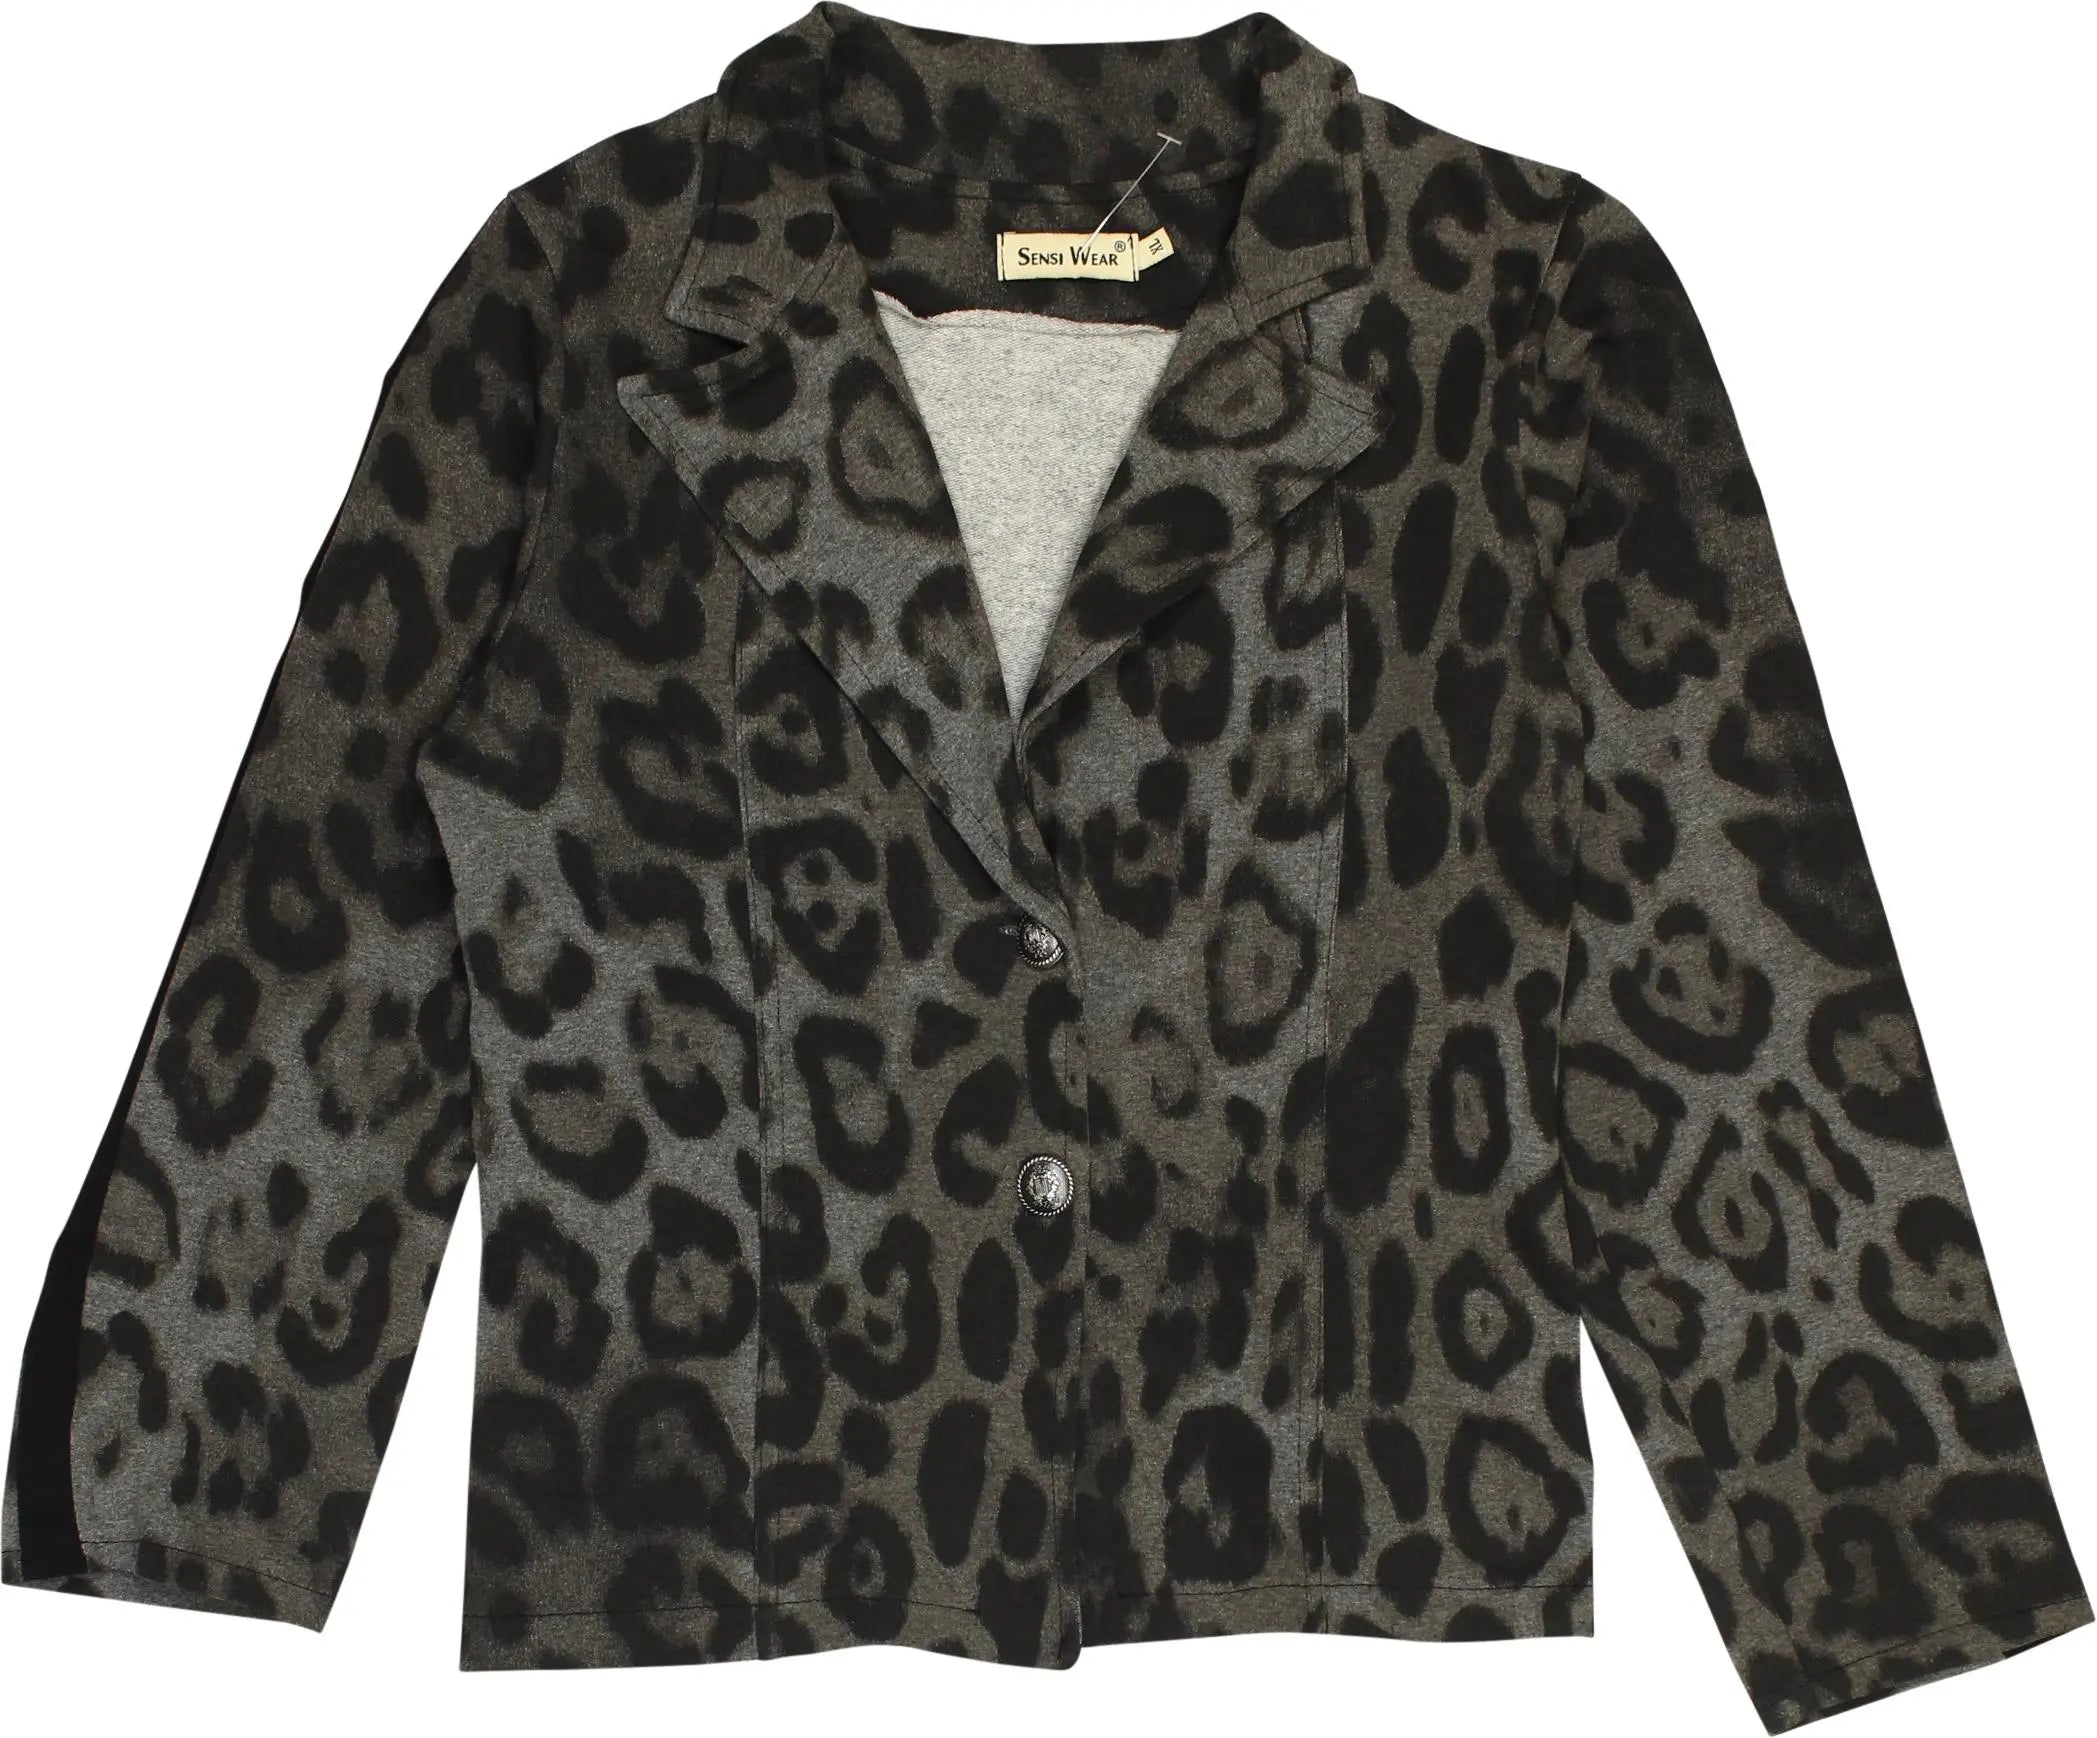 Sensi Wear - Leopard Print Blazer- ThriftTale.com - Vintage and second handclothing